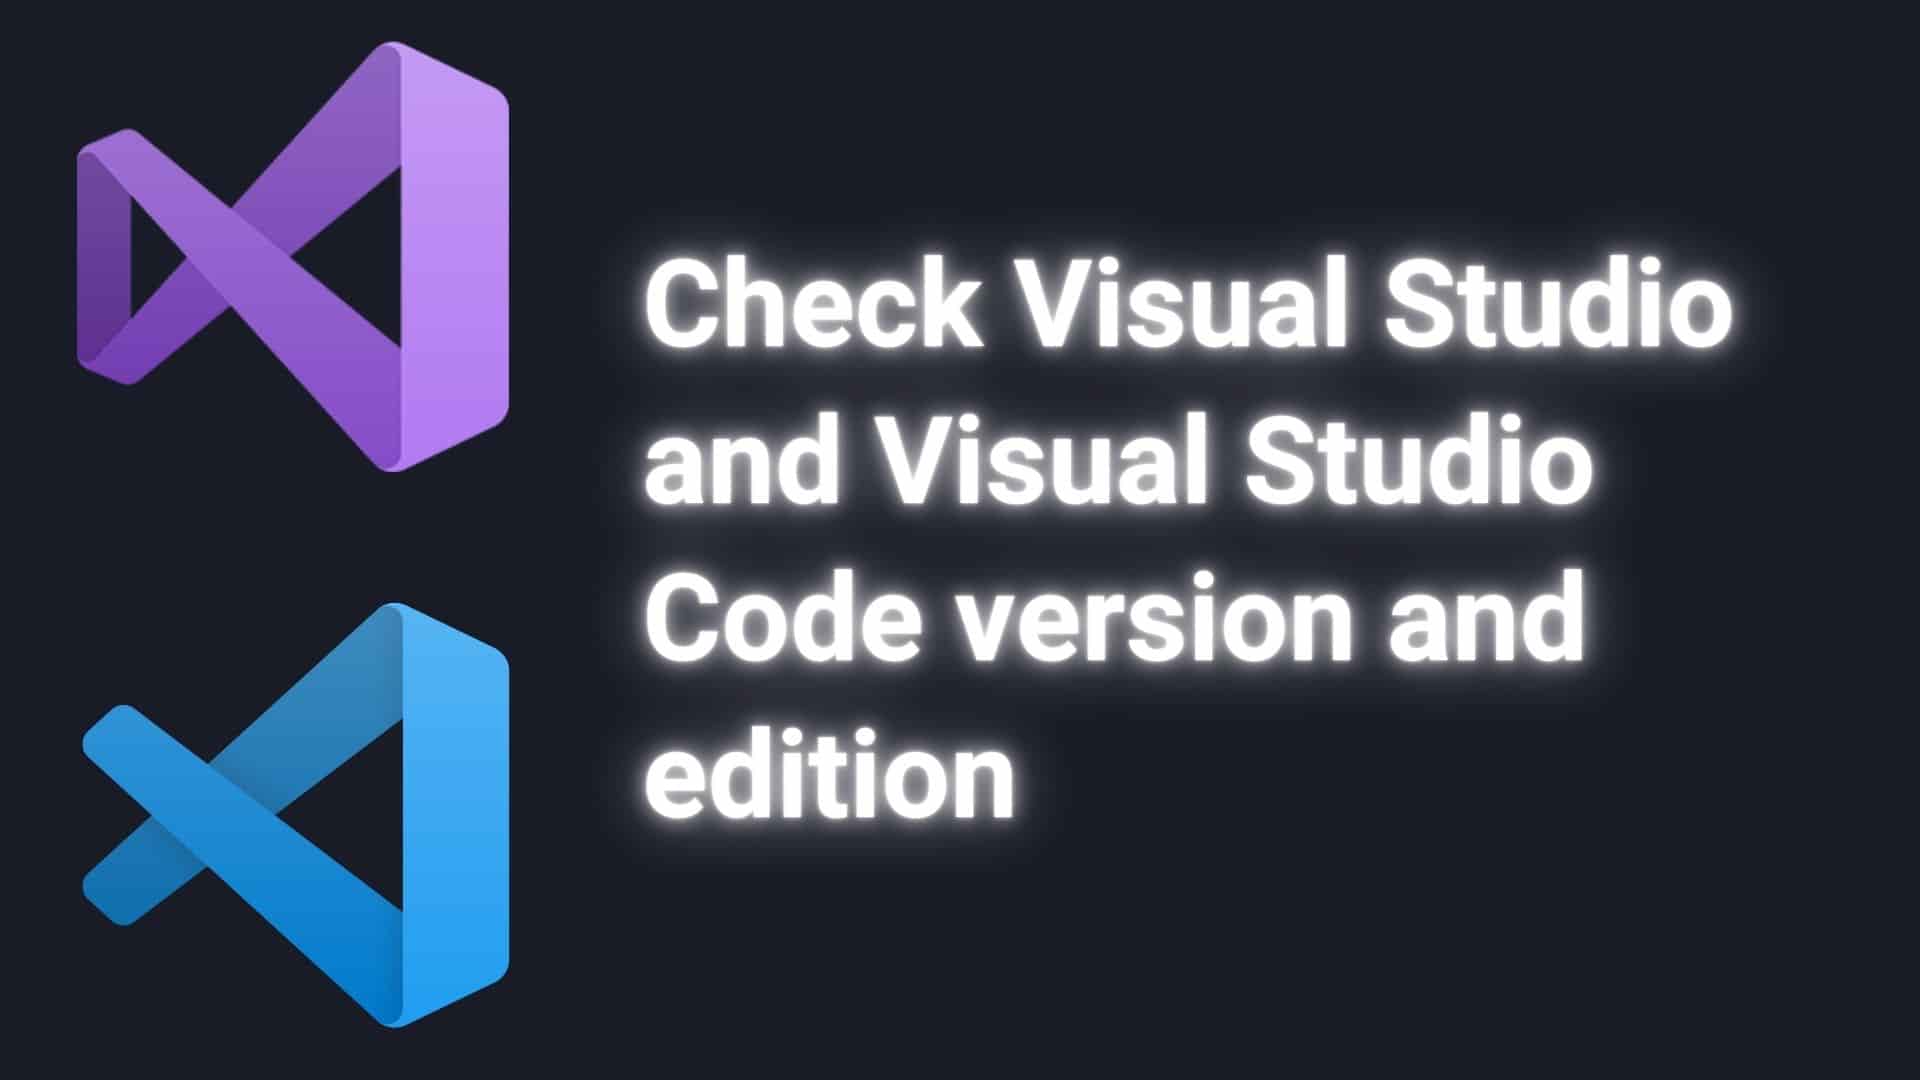 Check visual studio and visual studio code version and edition